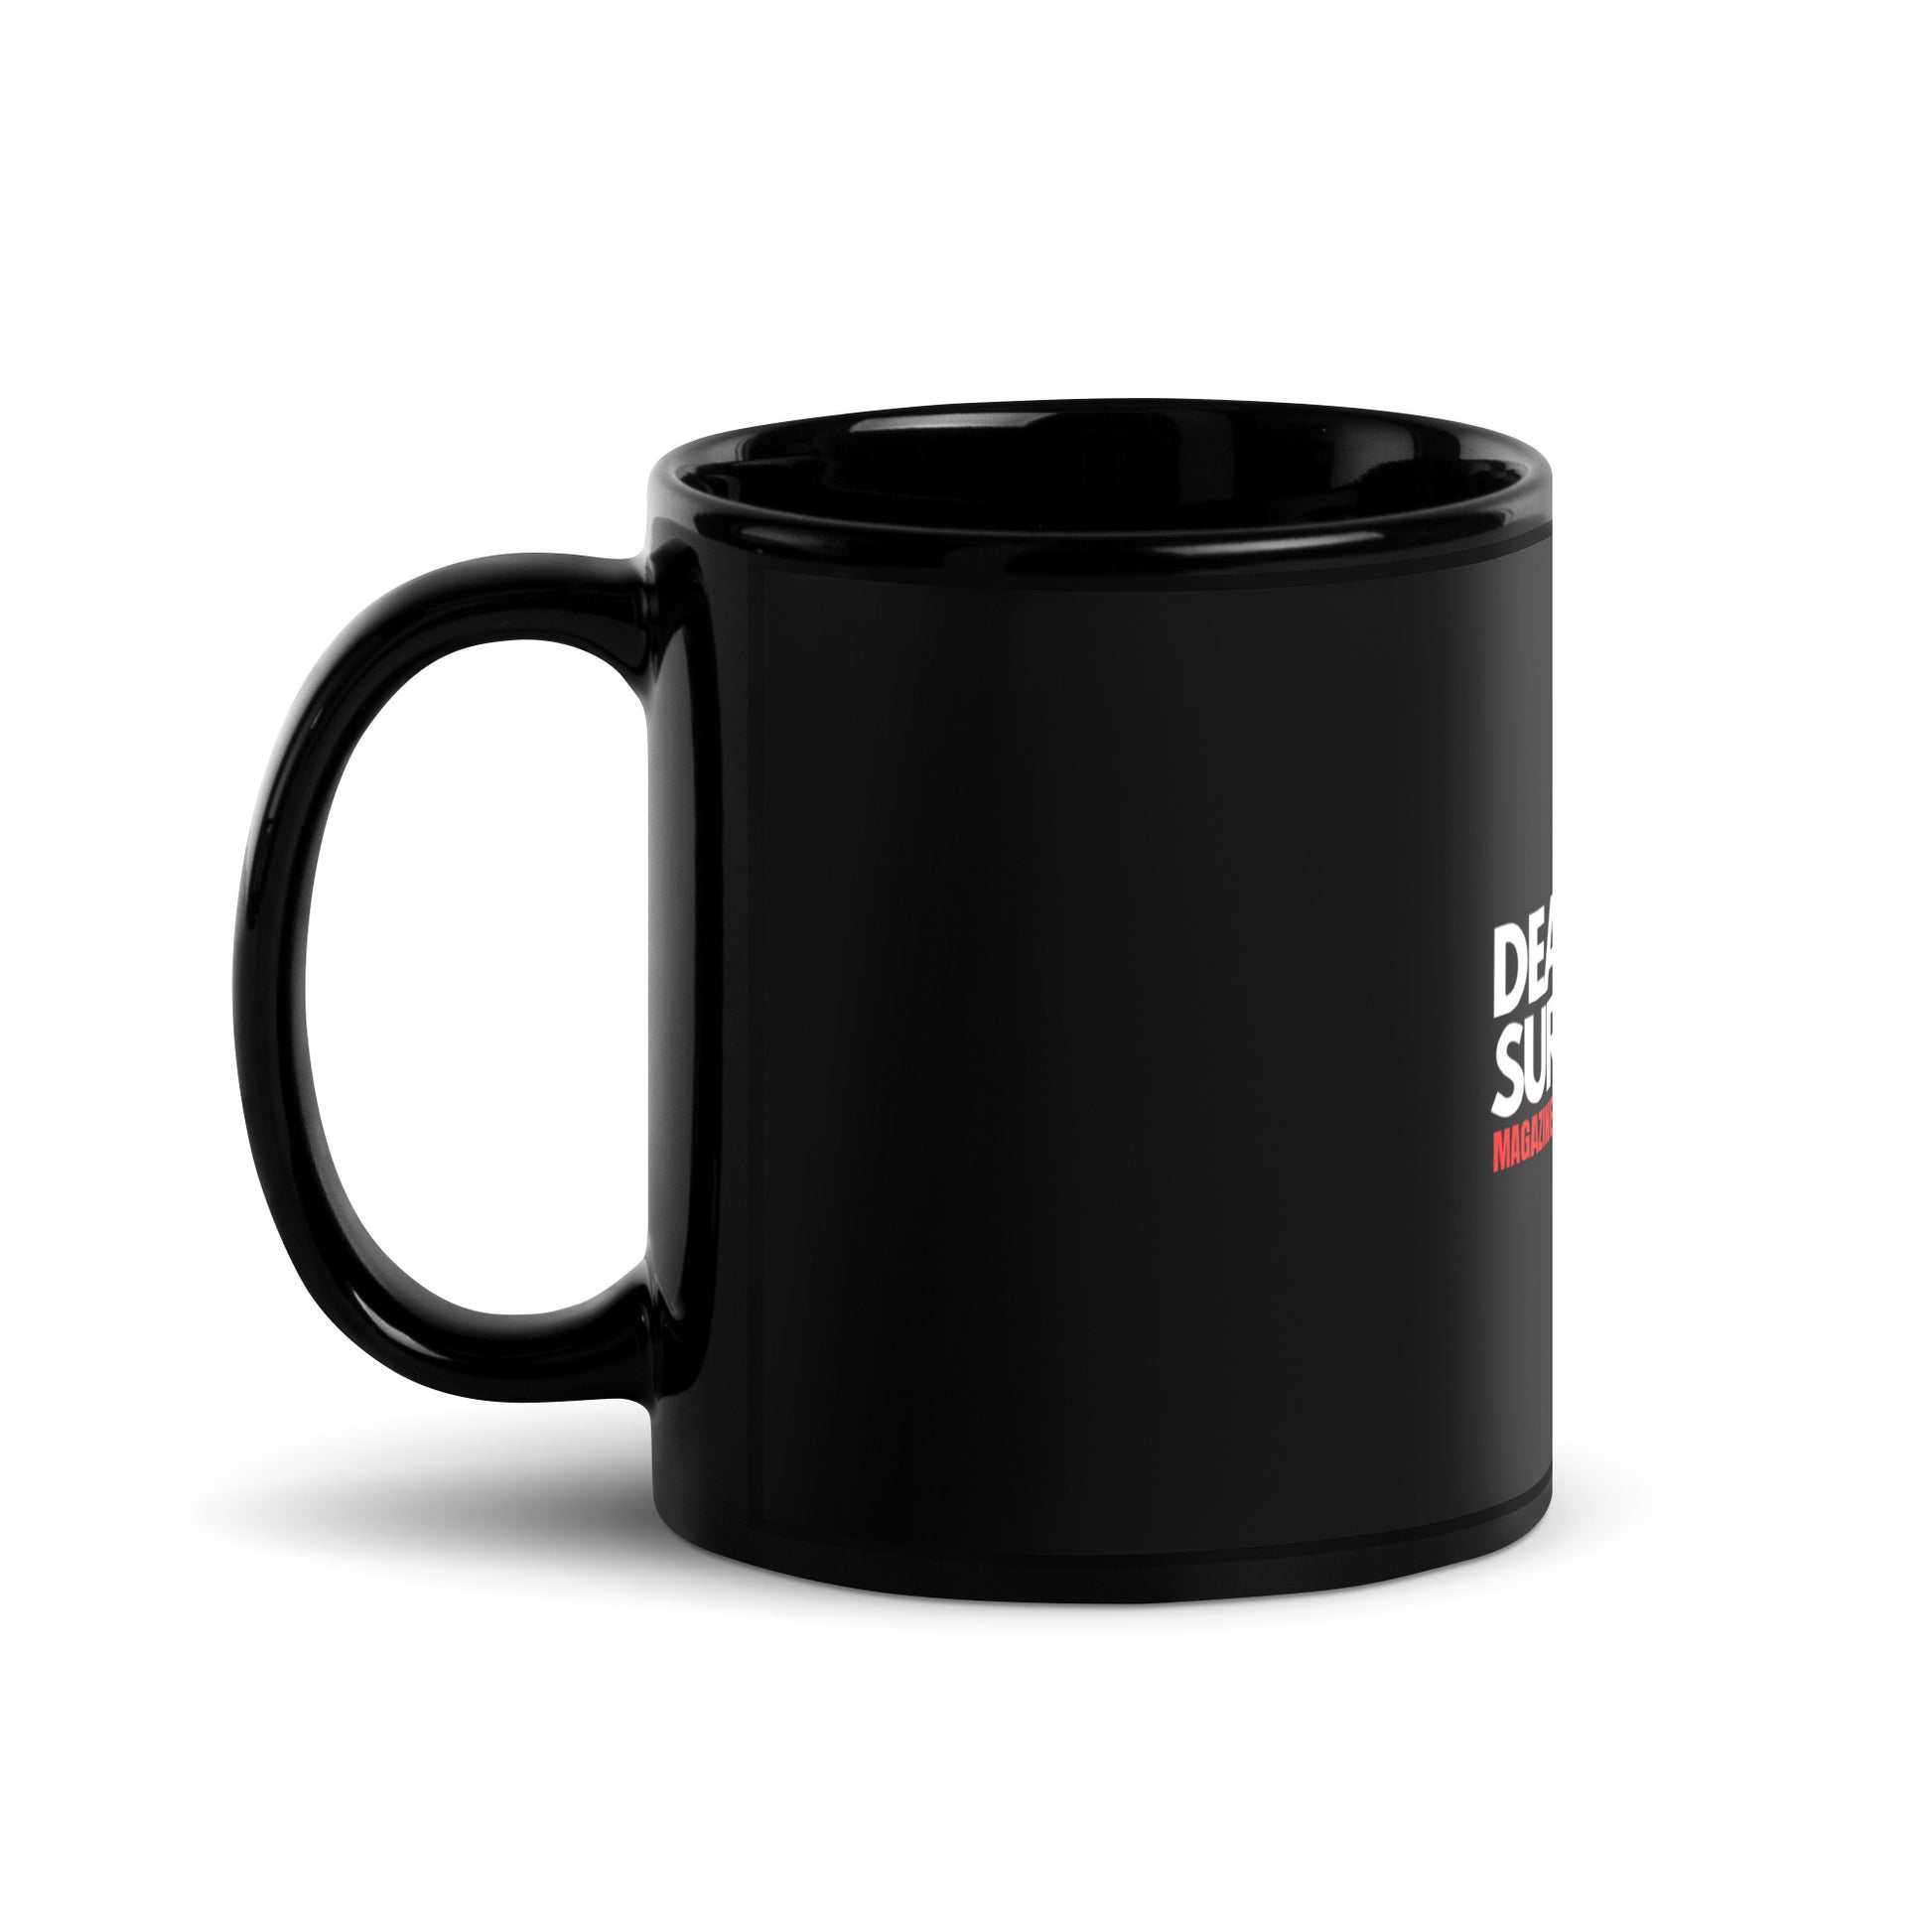 DAOS Coffee Mug deadlyartofsurvival.com